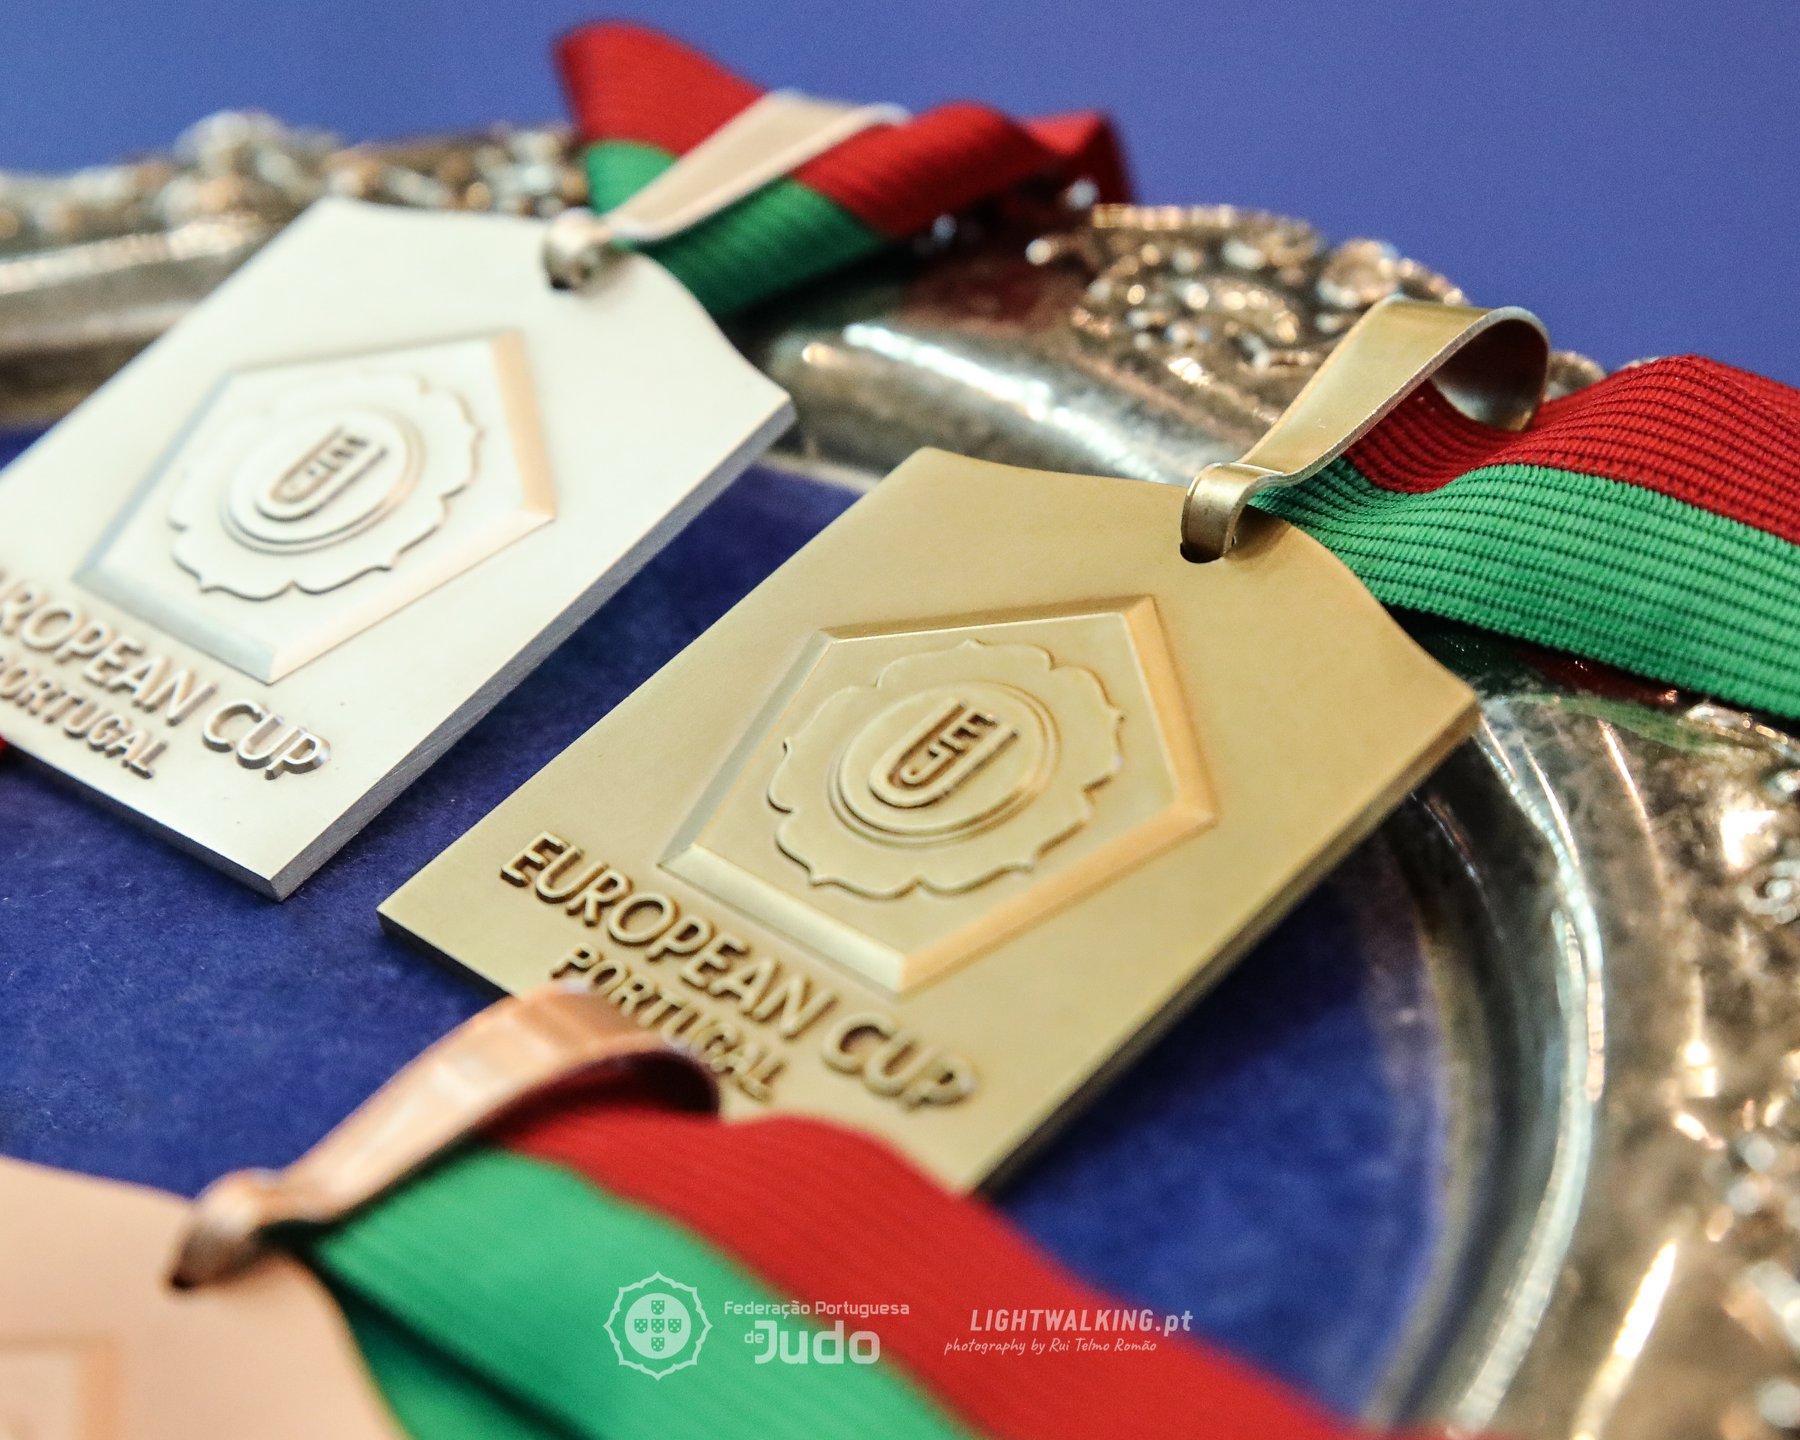 20190526_coimbra_romao_venue_medals